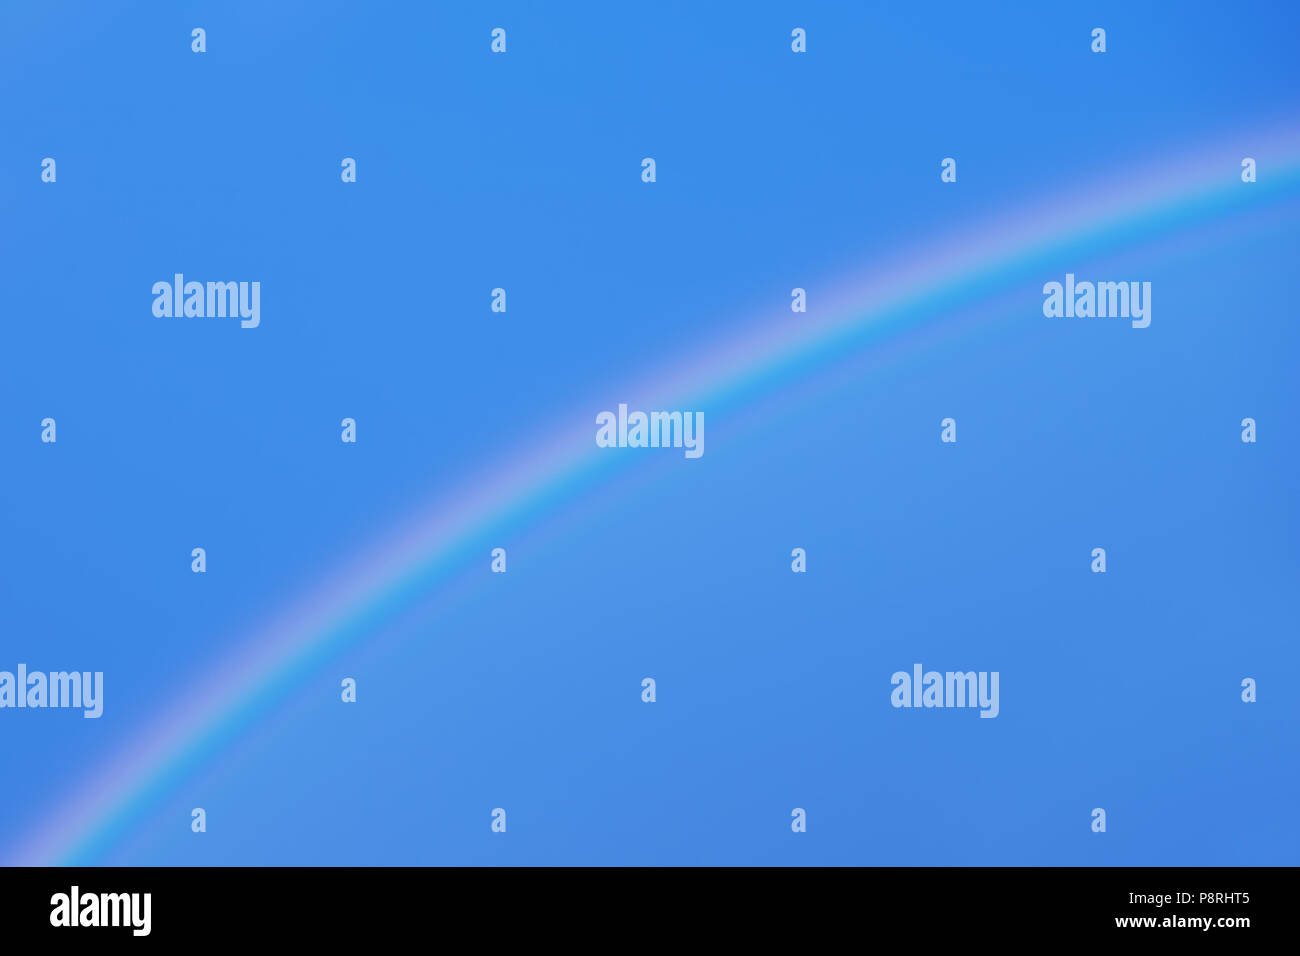 Rainbow on blue sky Stock Photo